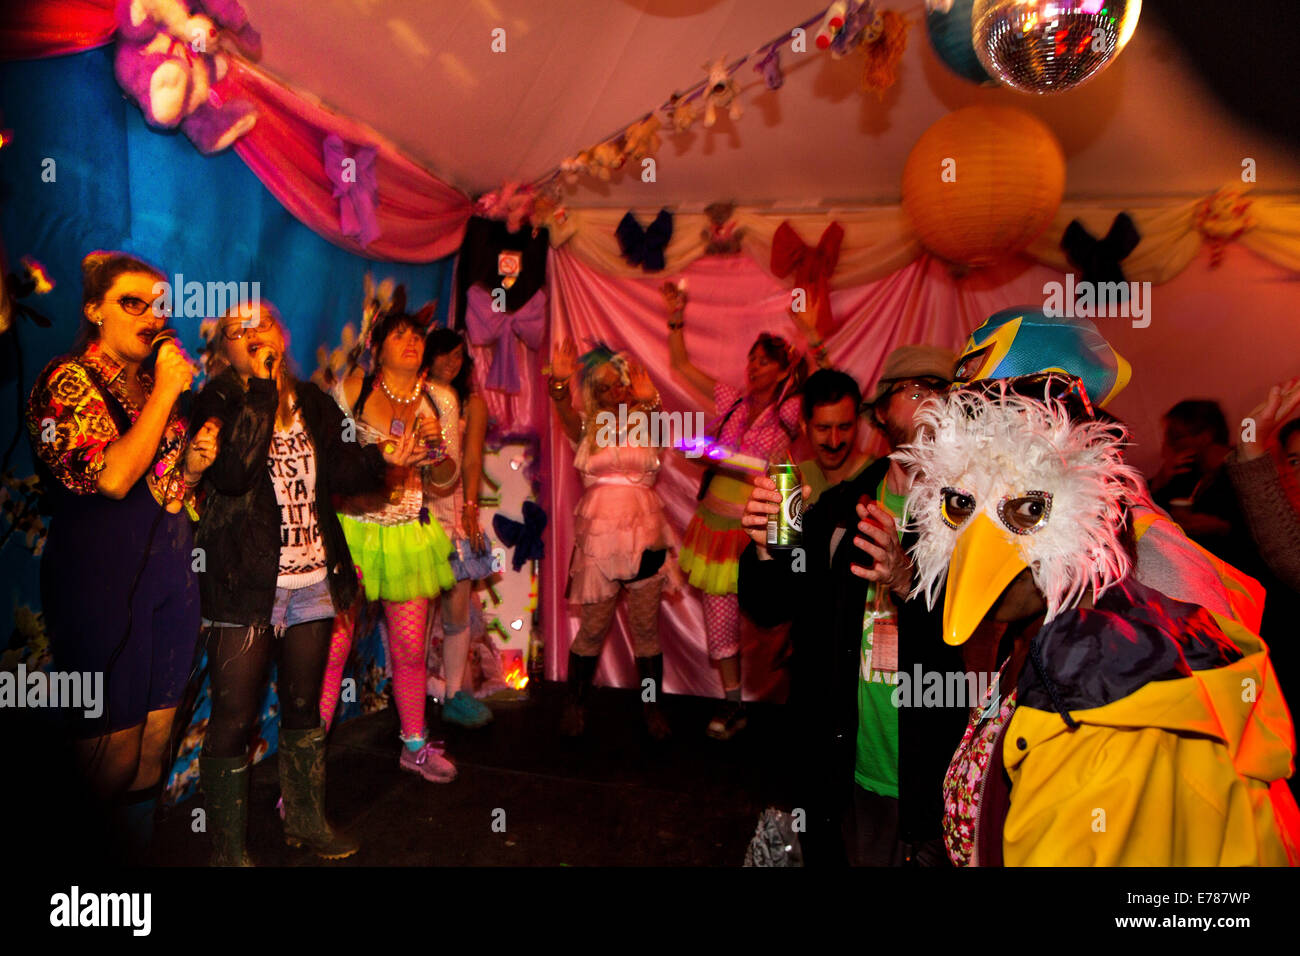 Glastonbury Festival 2014. Kamakaze Karaoke singing with man dressed as duck Stock Photo